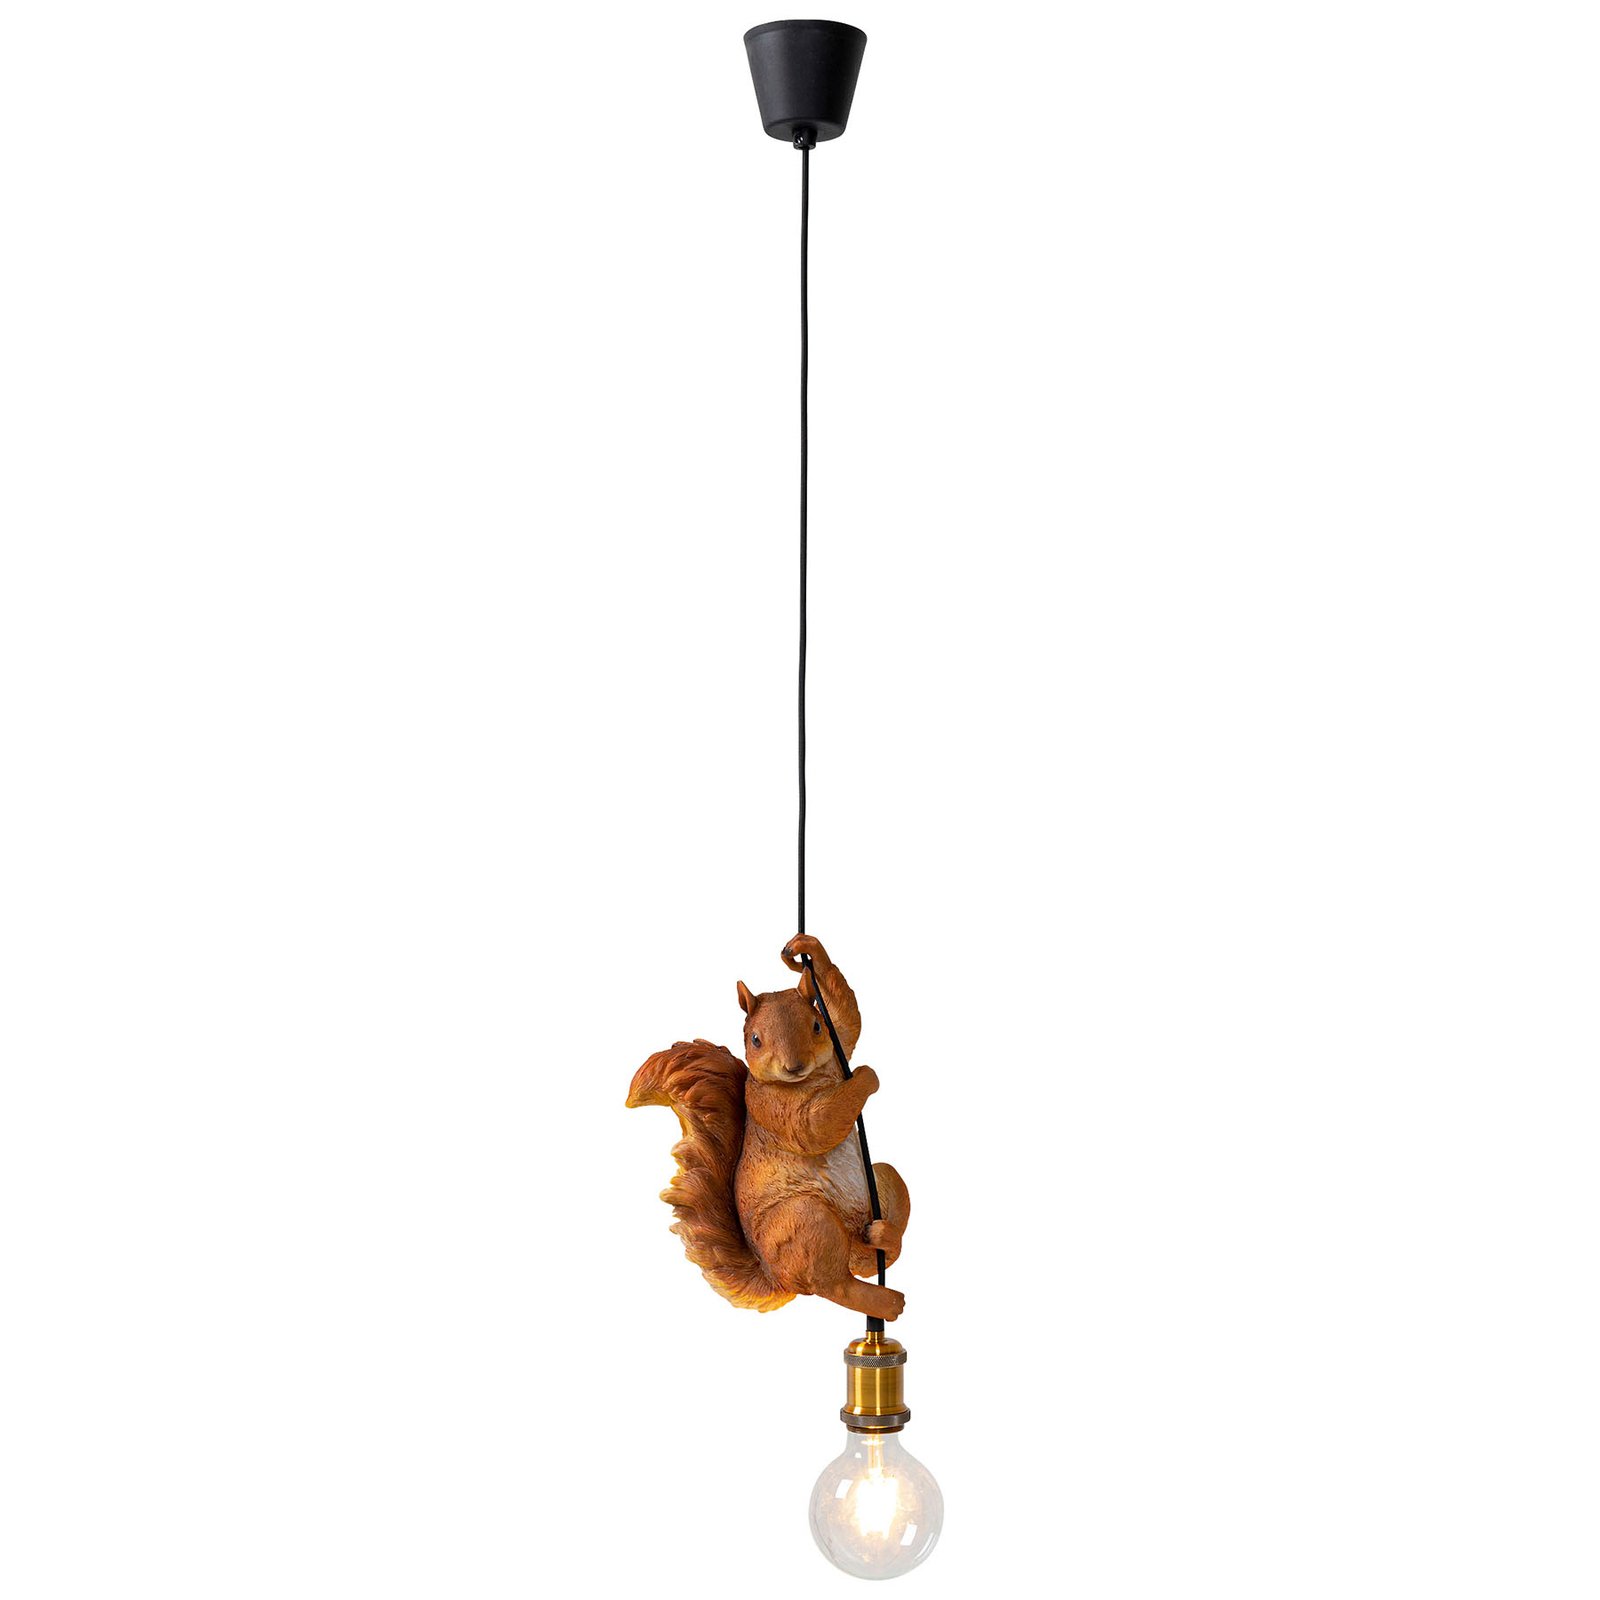 Lampa wisząca KAREN Squirrel z modelem wiewiórki